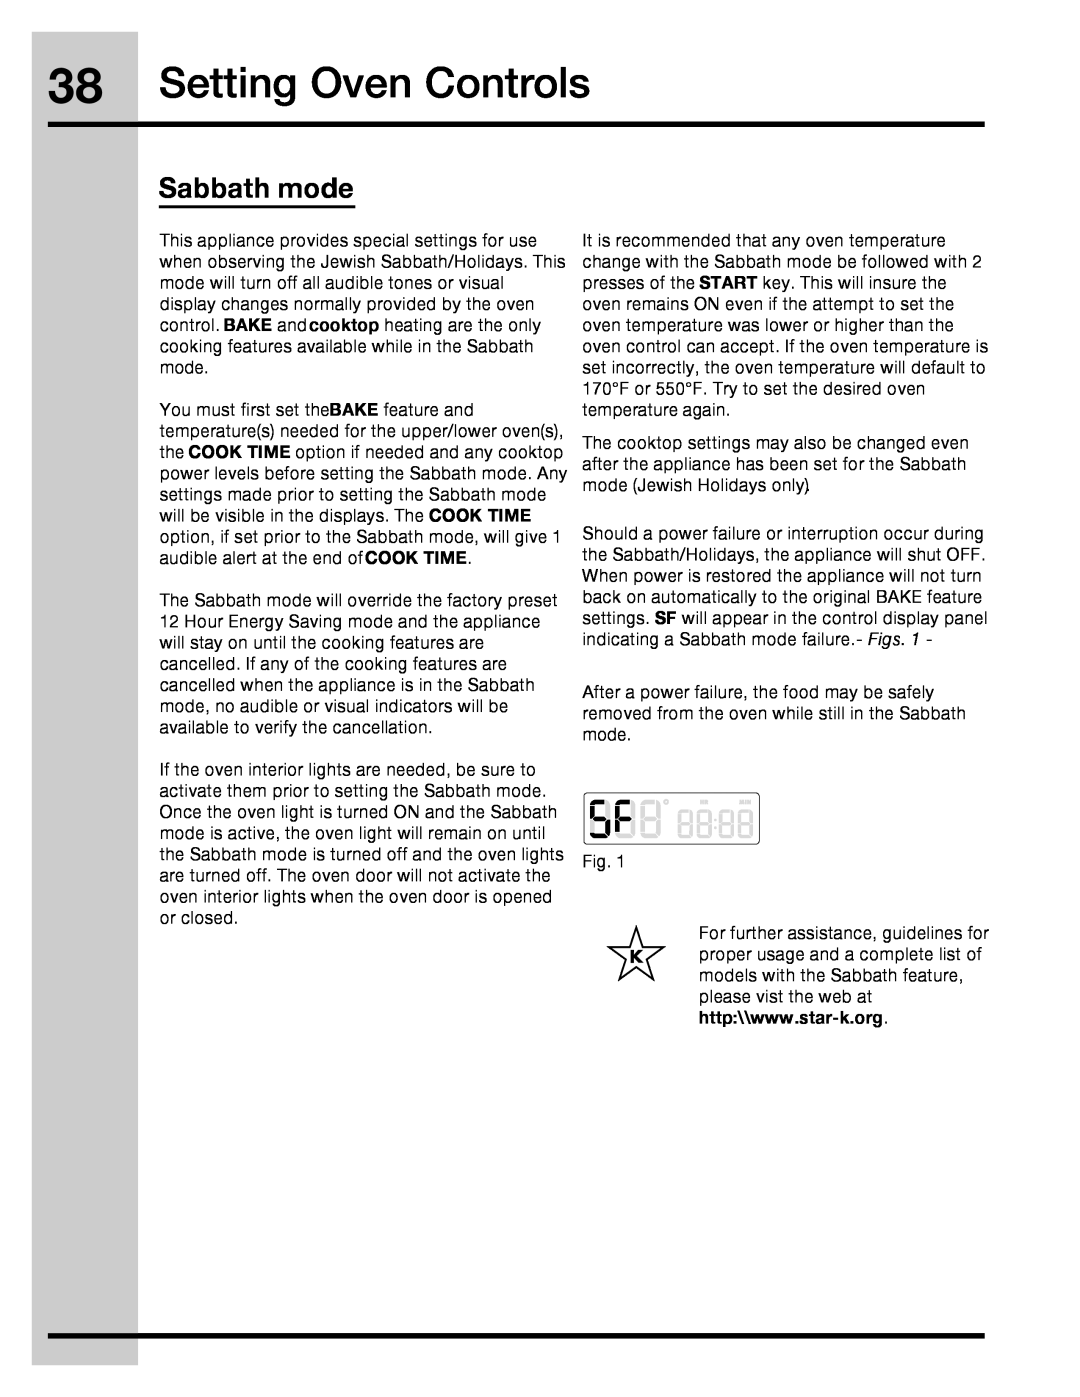 Electrolux 316471113 manual Setting Oven Controls, Sabbath mode 